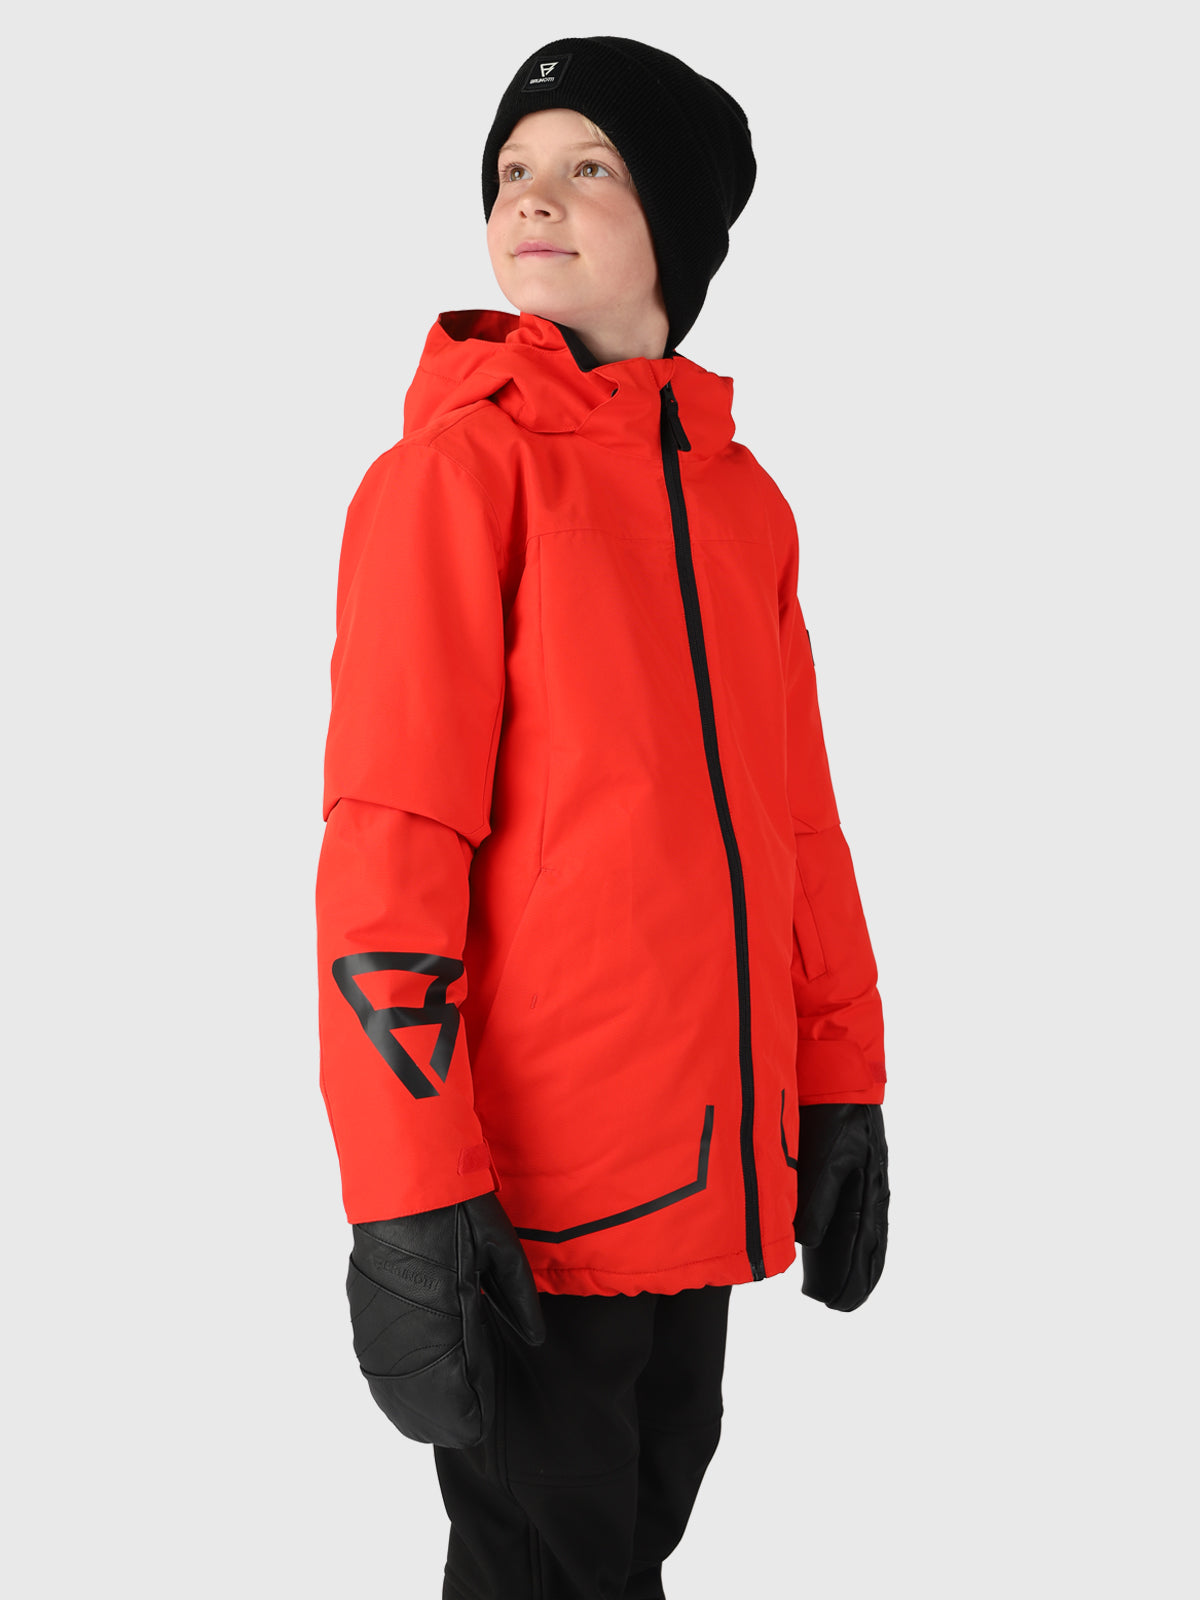 Tundery Boys Snow Jacket | Red